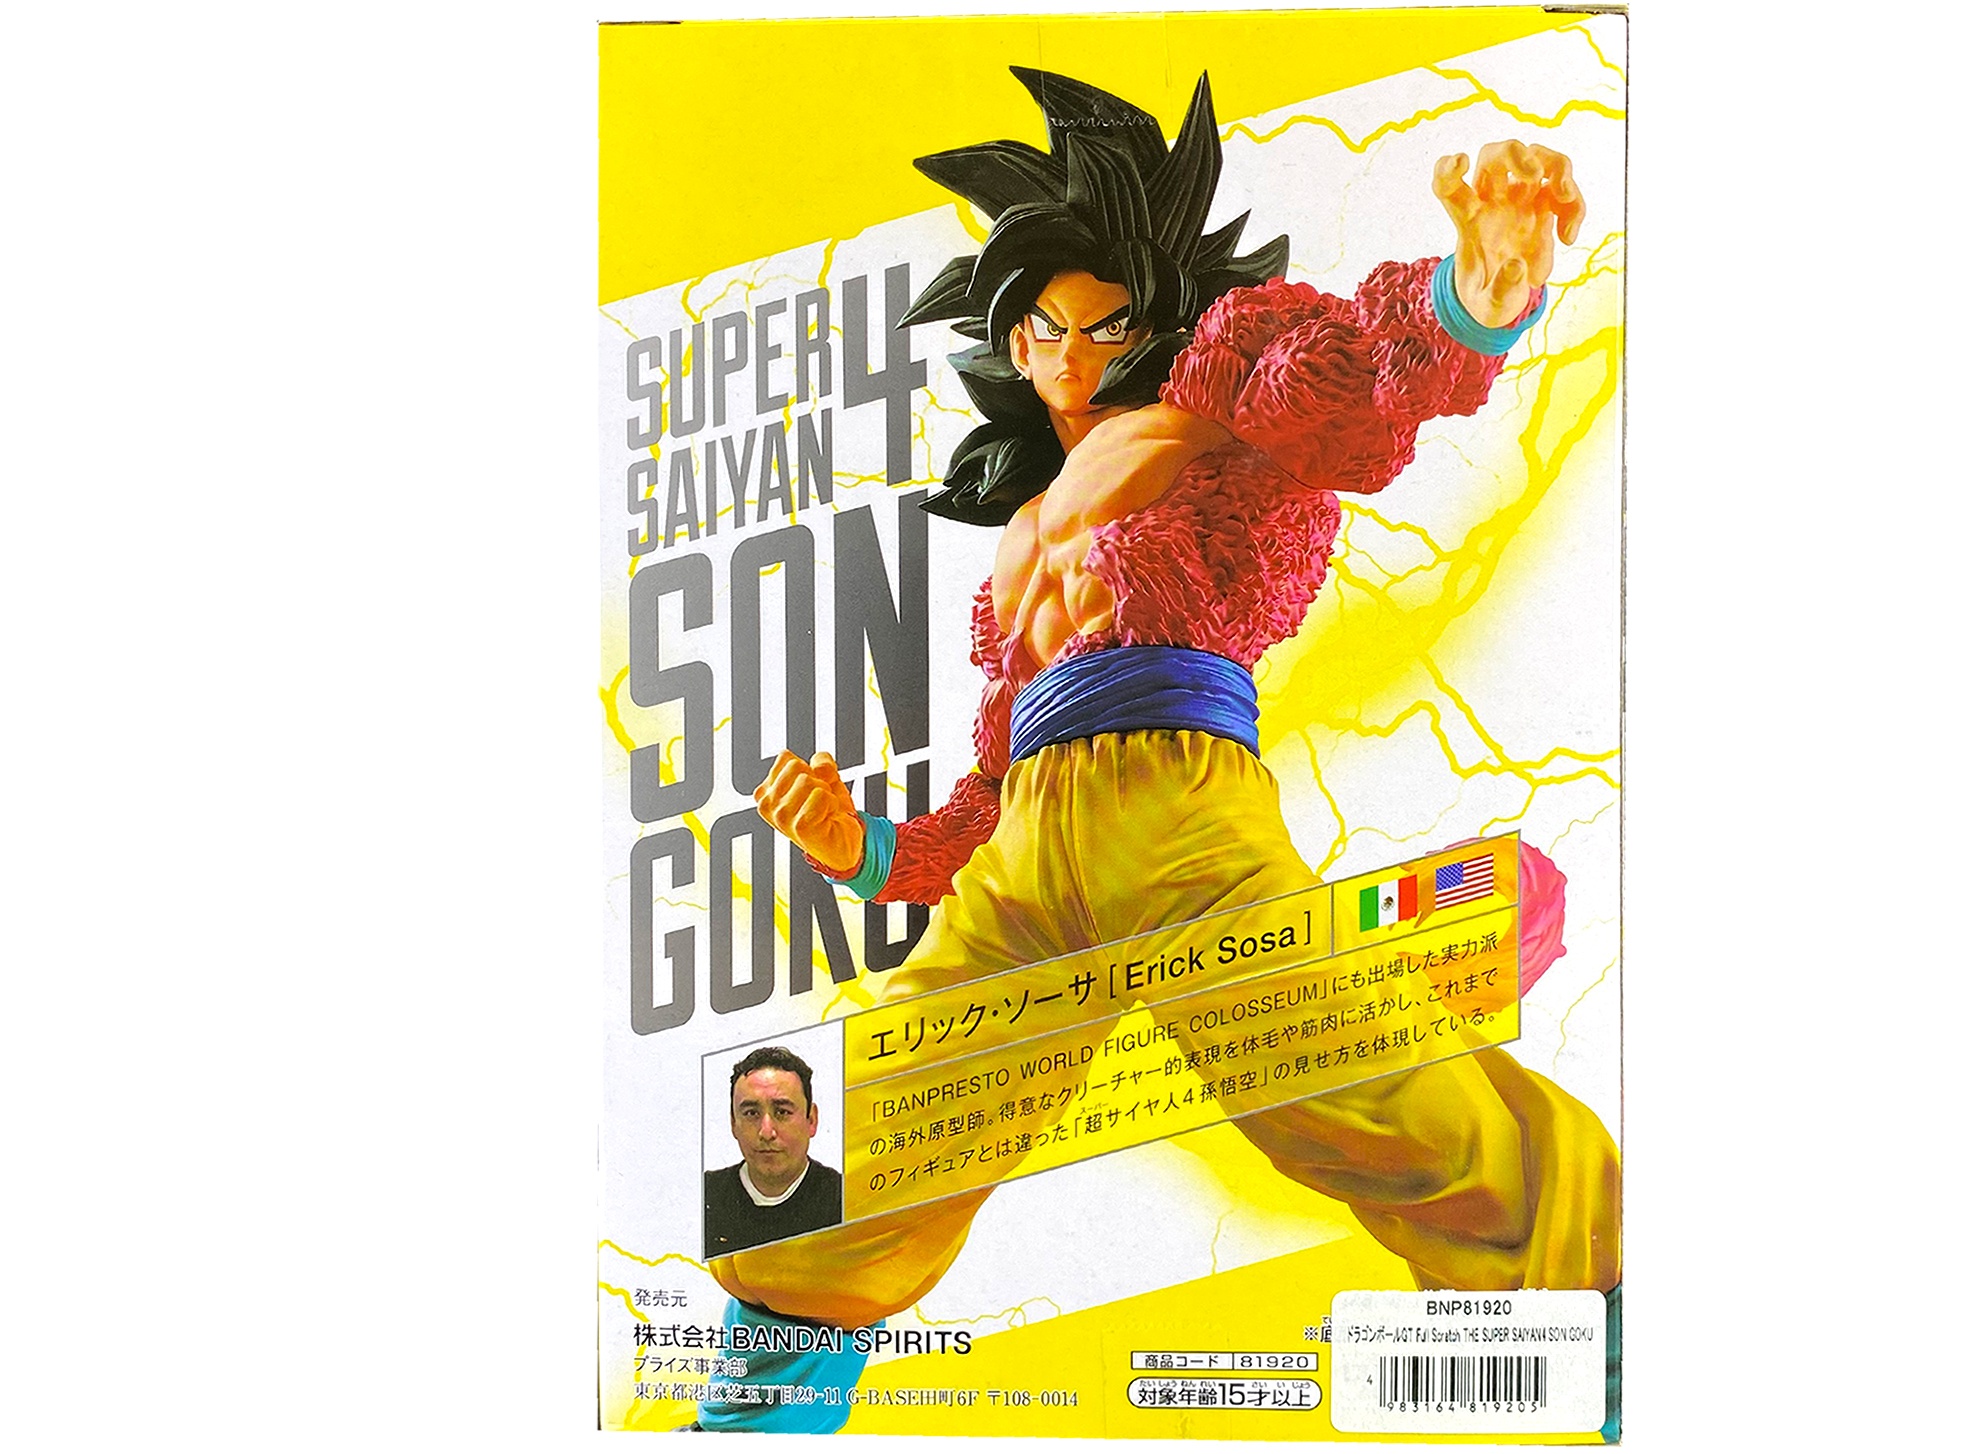 Animez - Anime Store - Dragon Ball GT Full Scratch - Super Saiyan 4 Son  Goku £32.